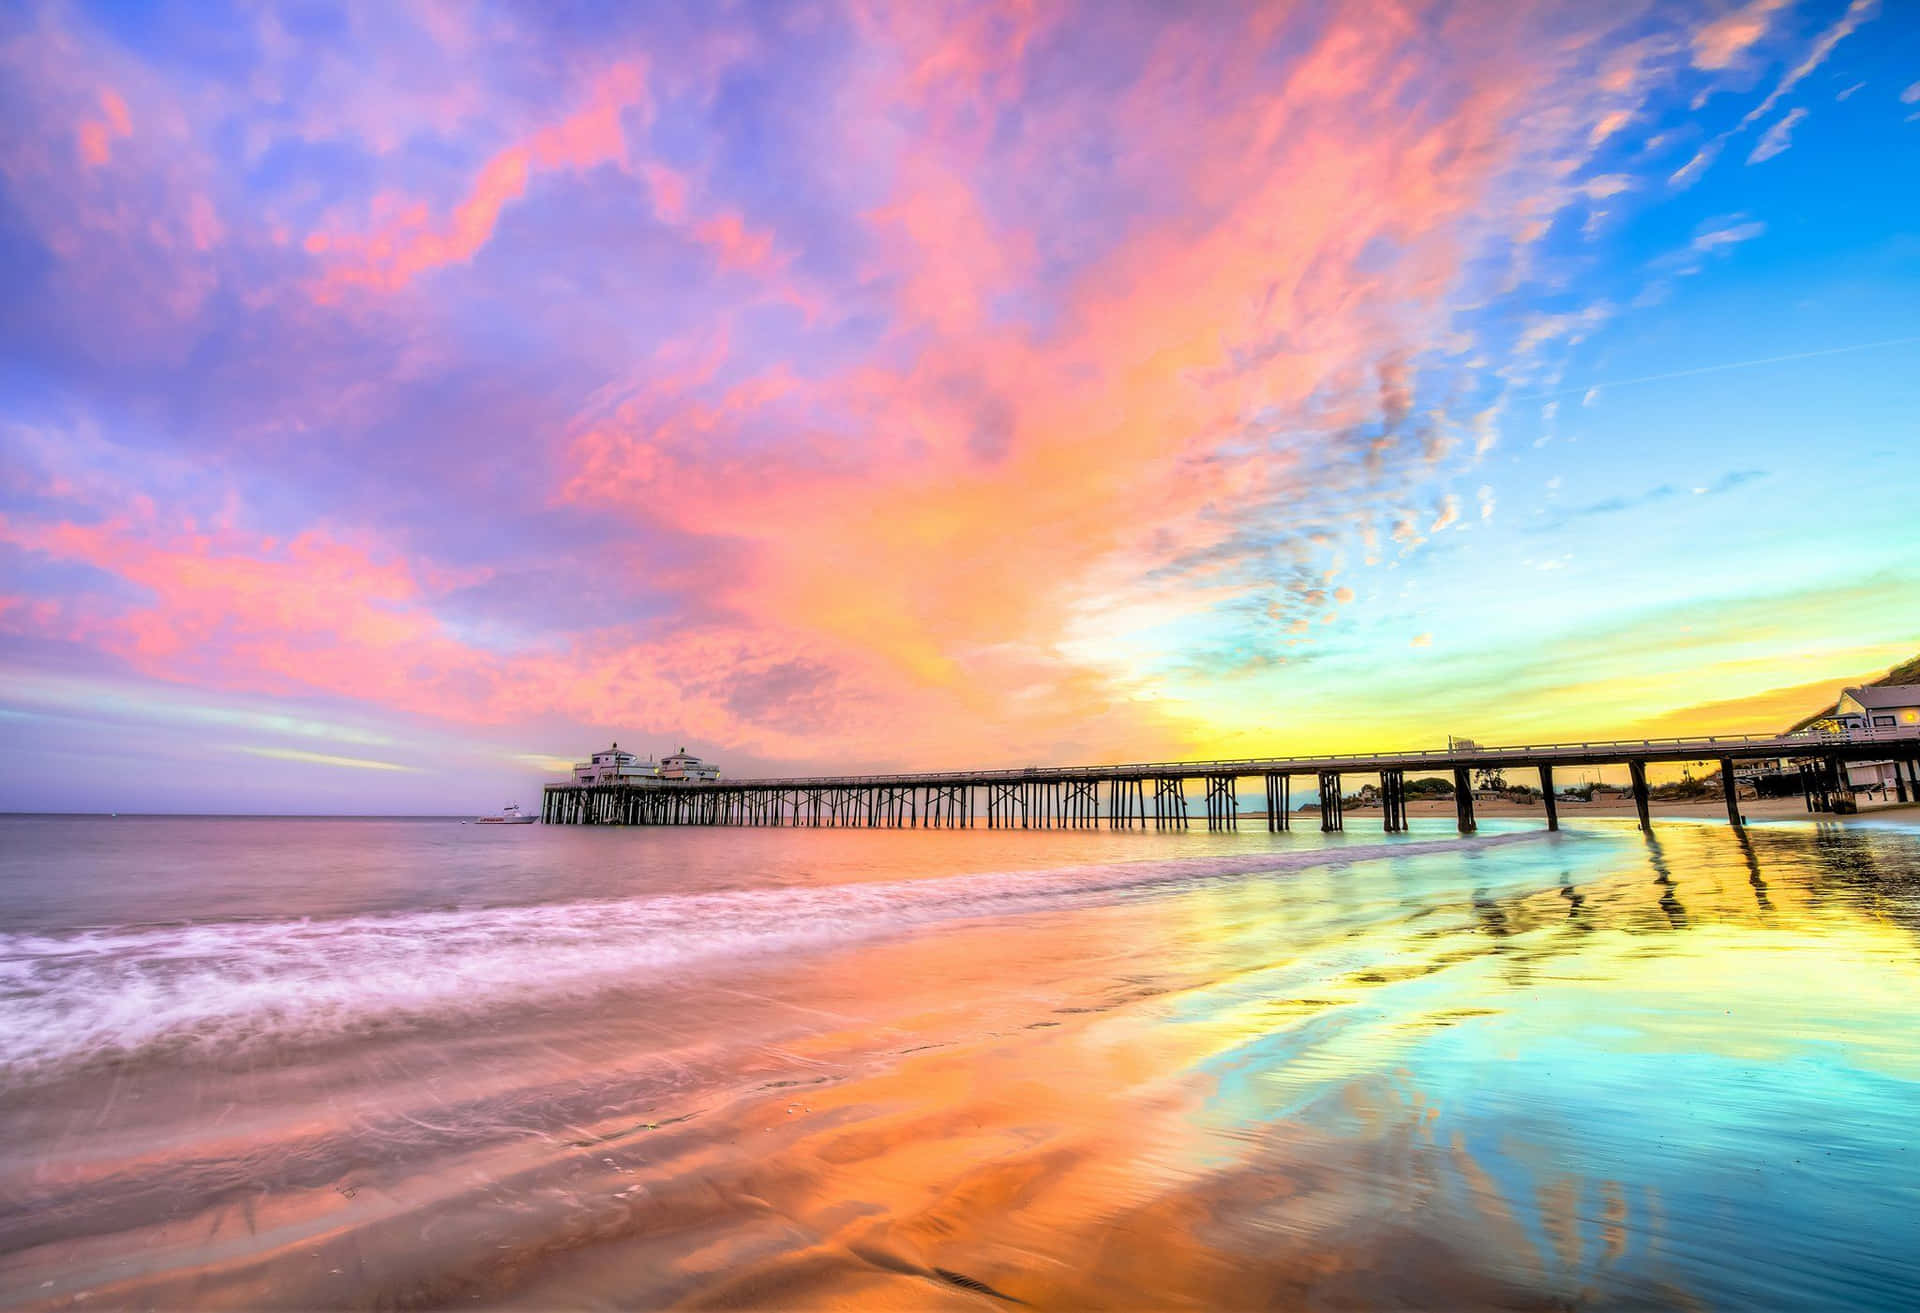 Enjoy the Sunrise at California's Coast